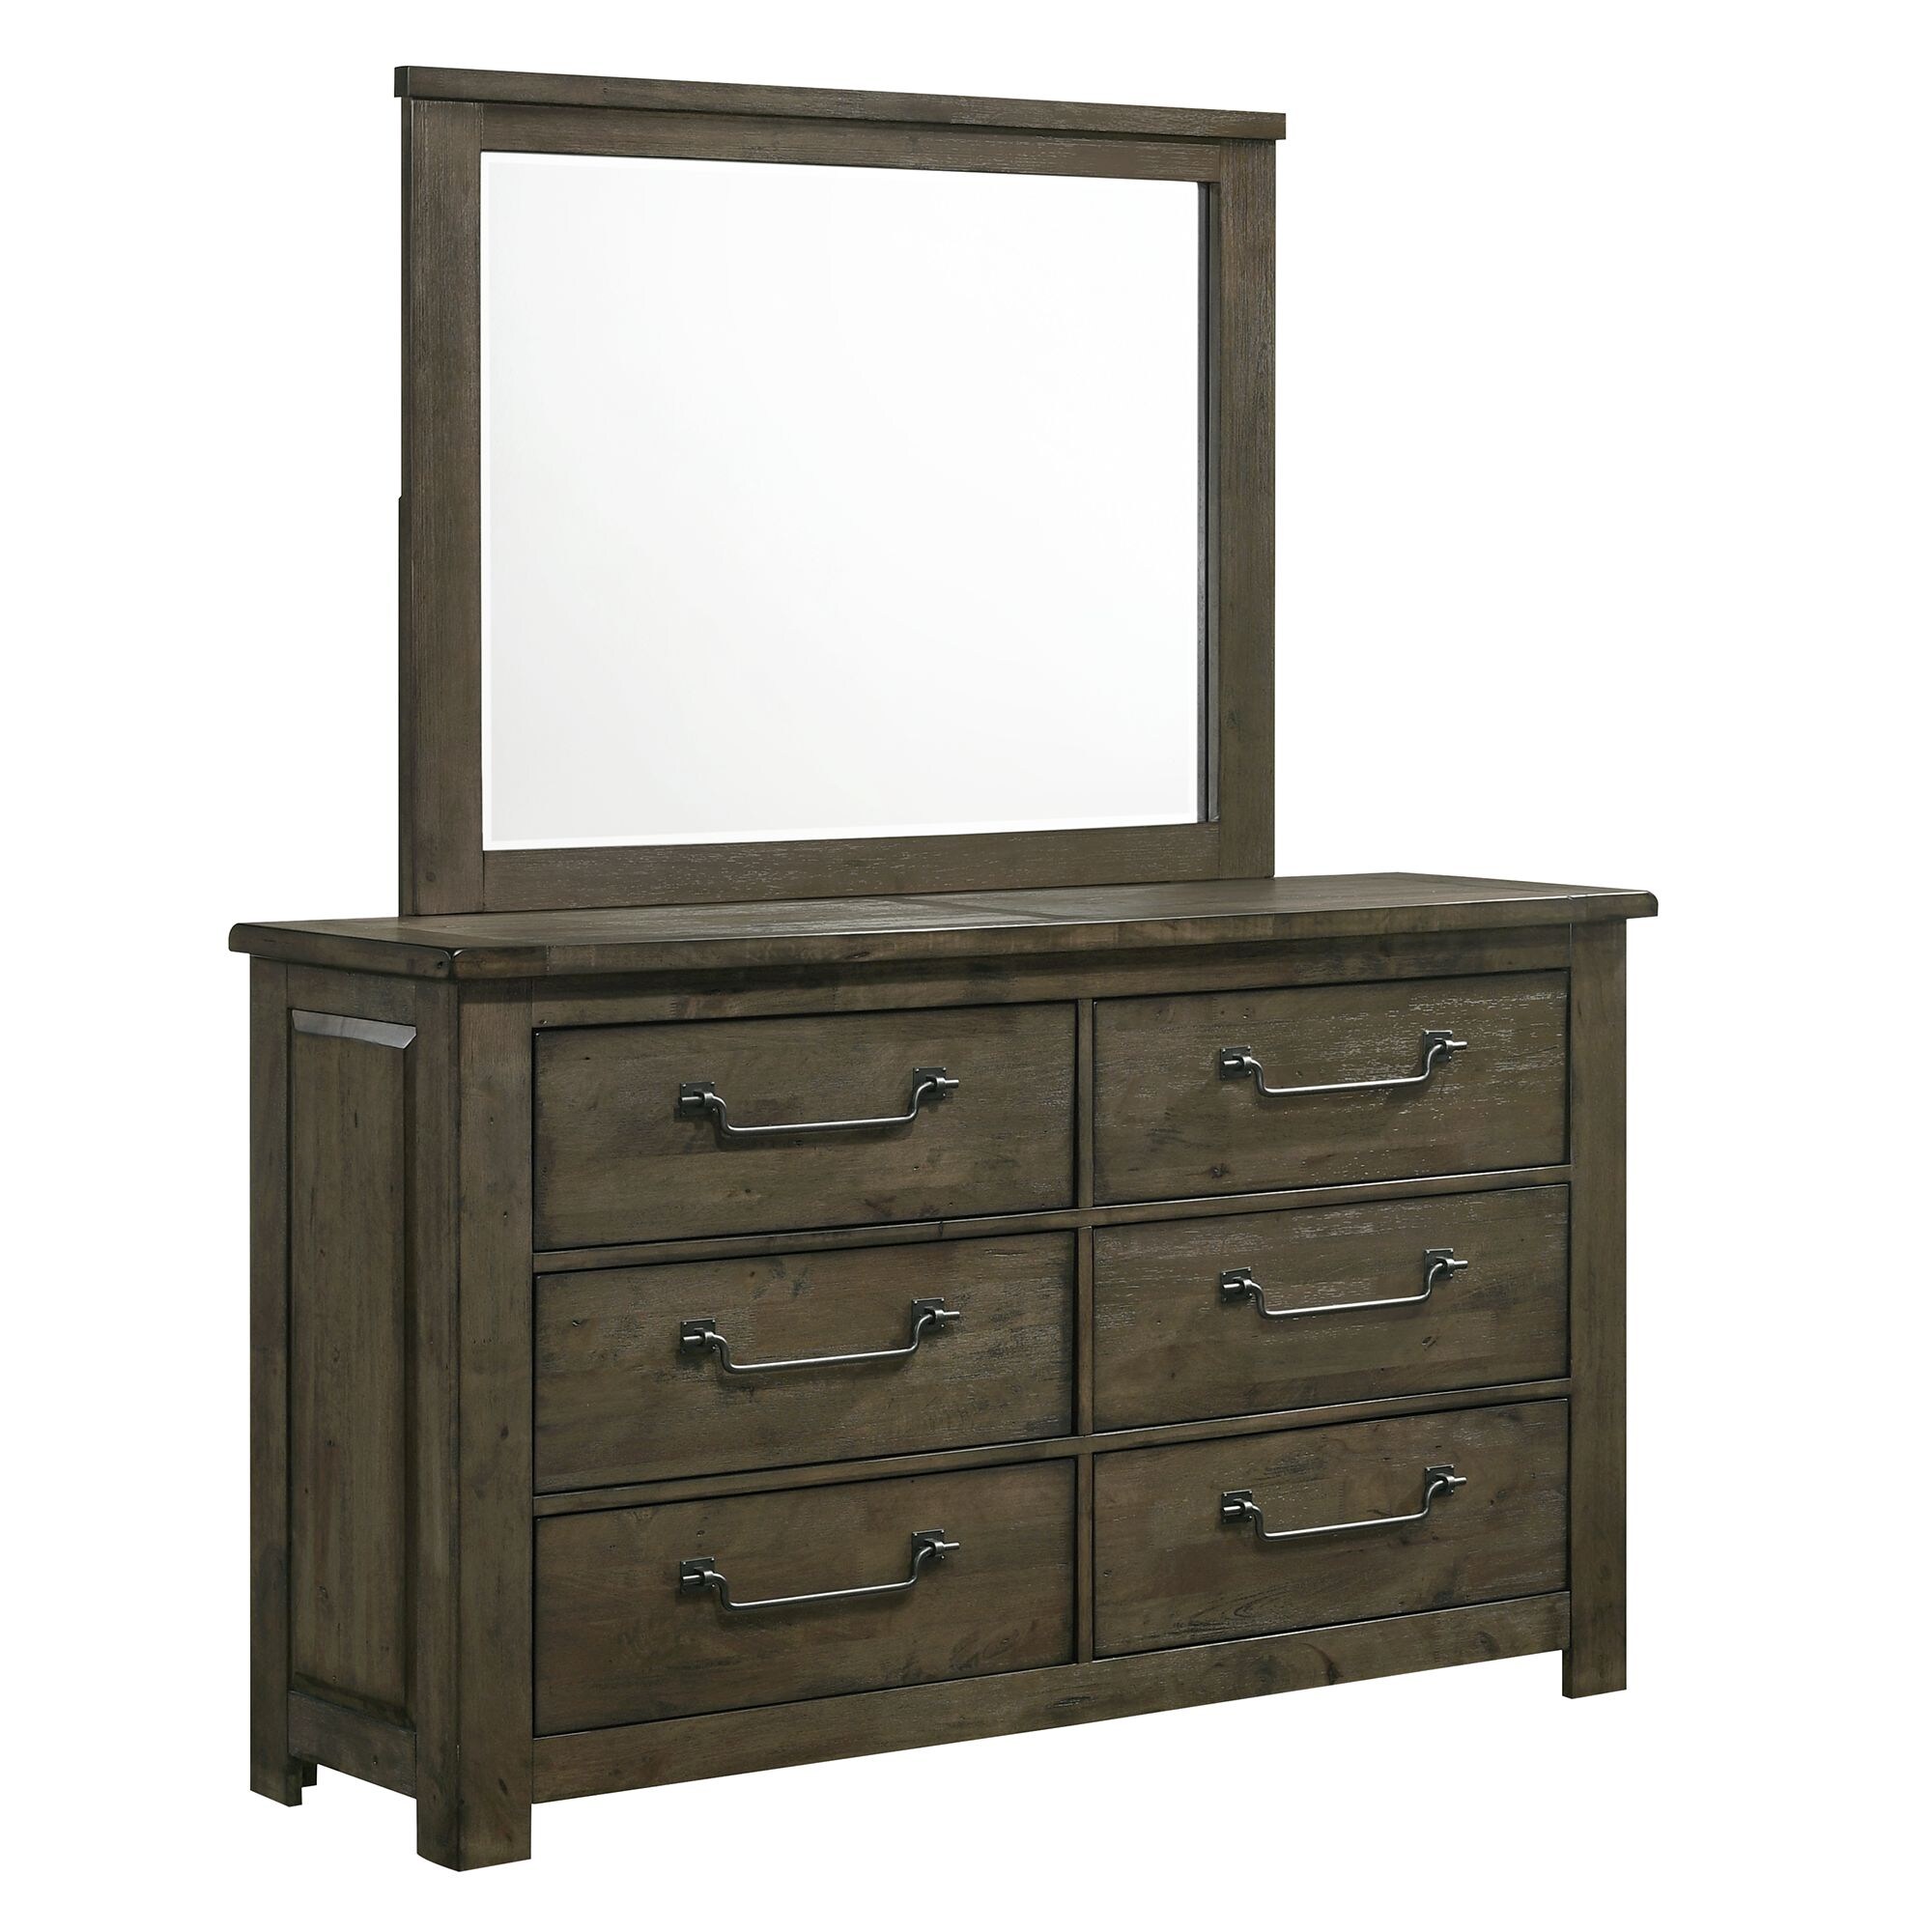 Furniture Hardware Pair of Dresser Mirror Hanger Bolts 4" OA Dark Golden Bronze 